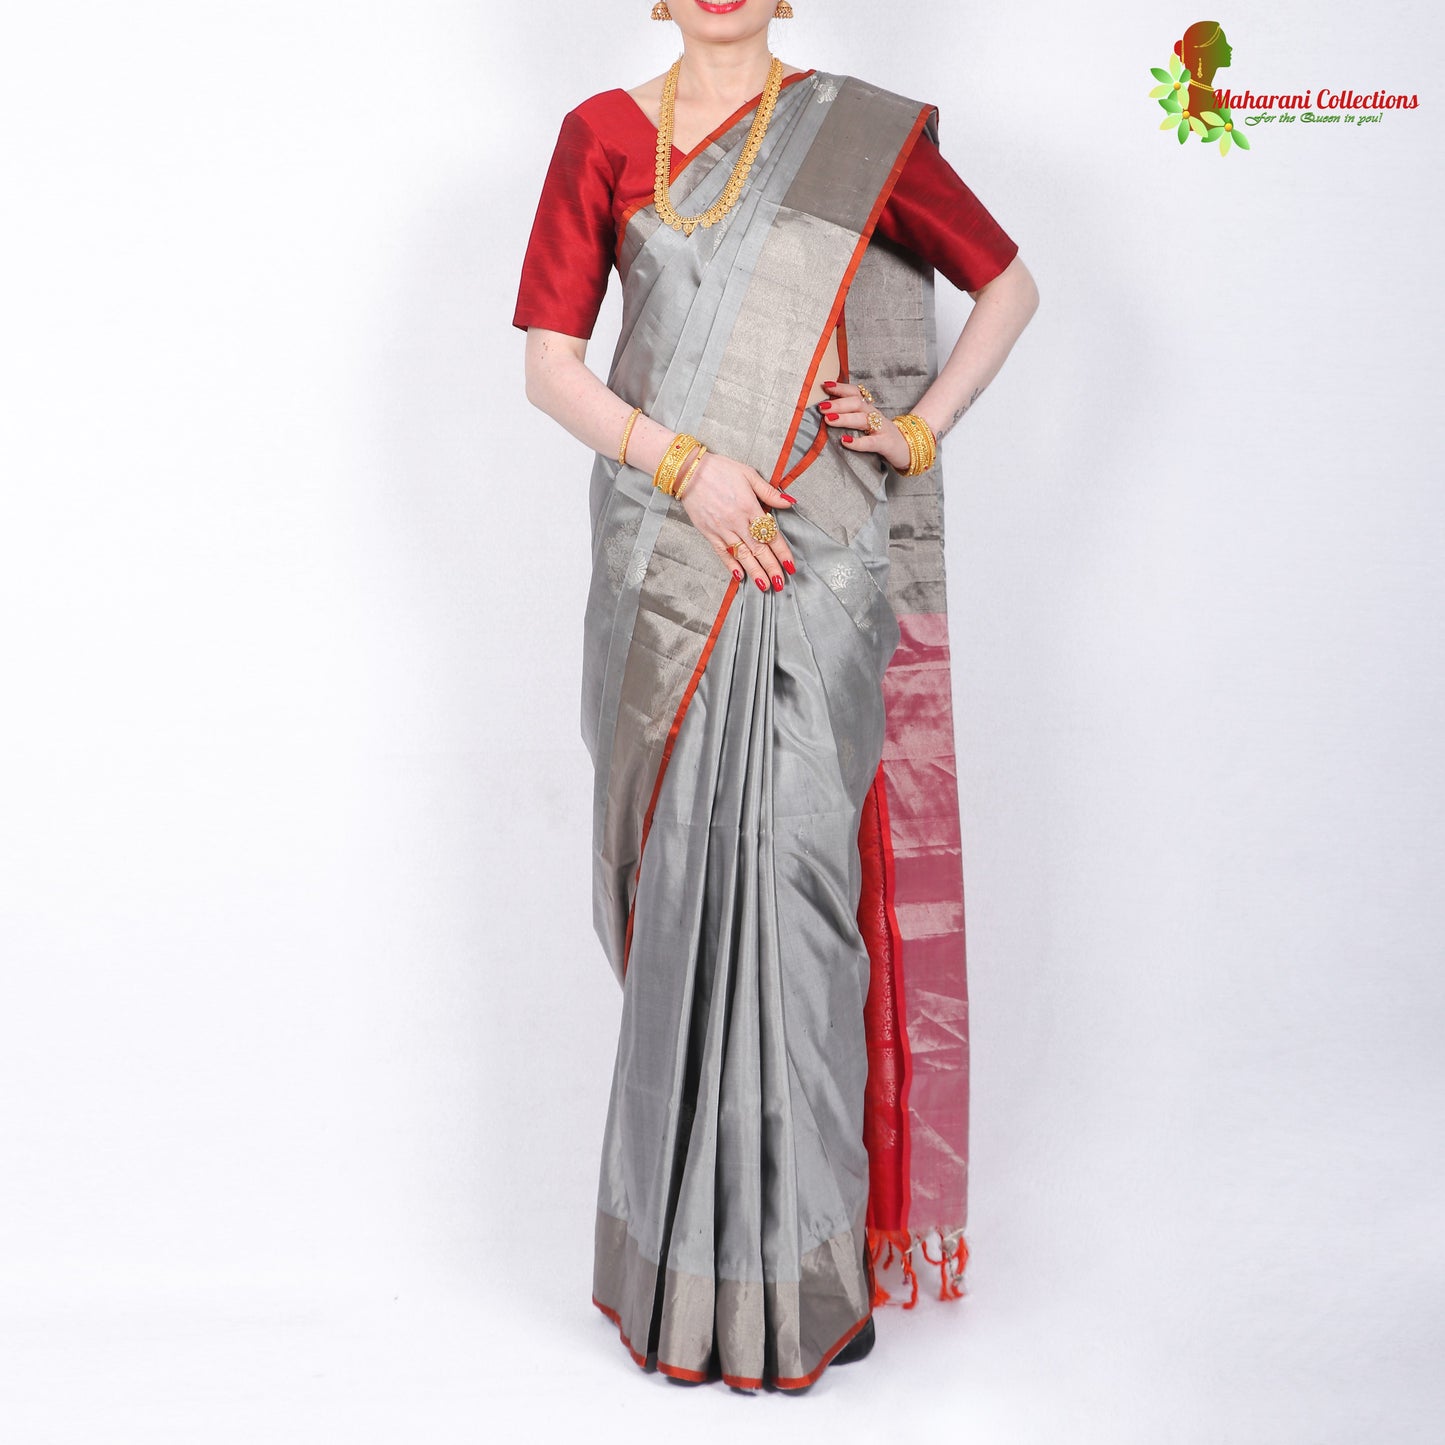 Maharani's Pure Handloom Kanjivaram Silk Saree - Slate Grey with Red Pallu and Silver Zari Border